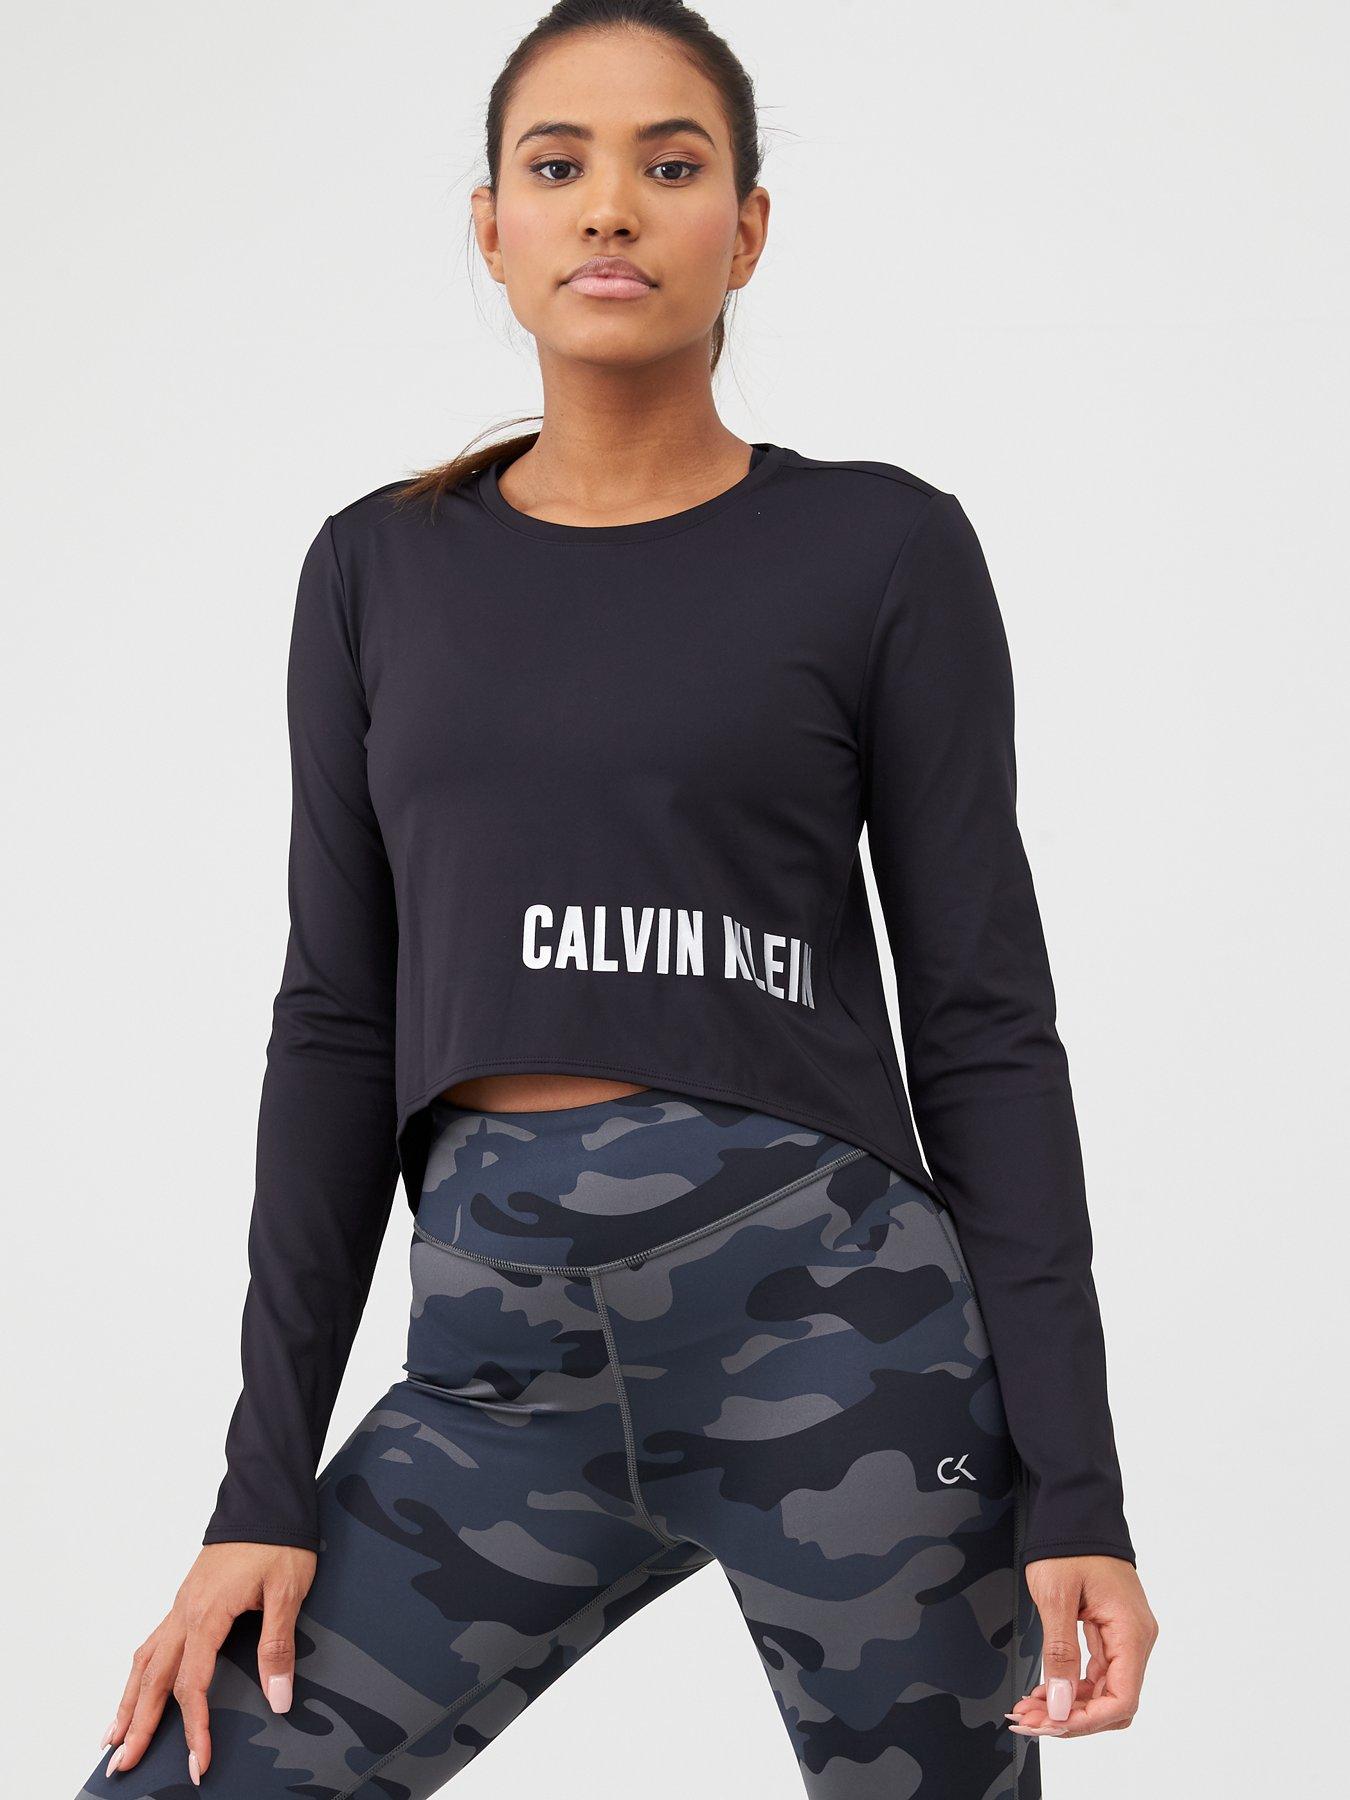 calvin klein performance long sleeve shirt